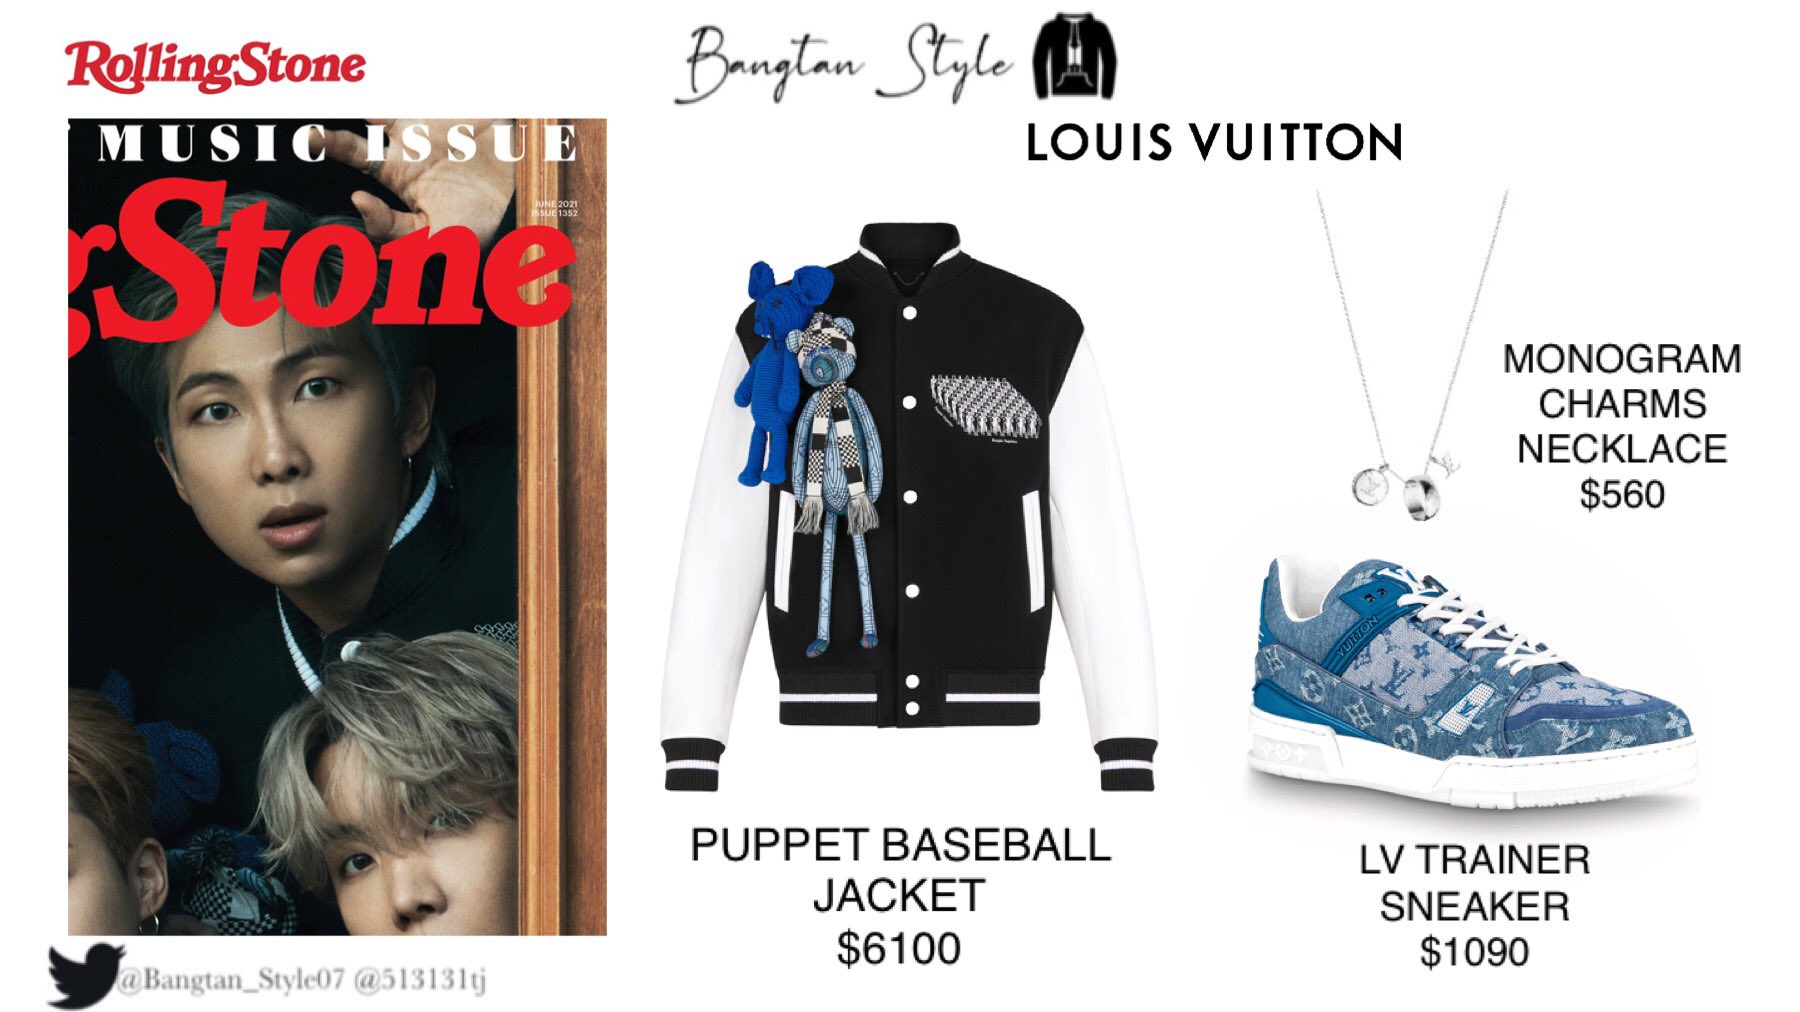 BTS' 'Rolling Stone' Magazine Cover Features Endless Louis Vuitton